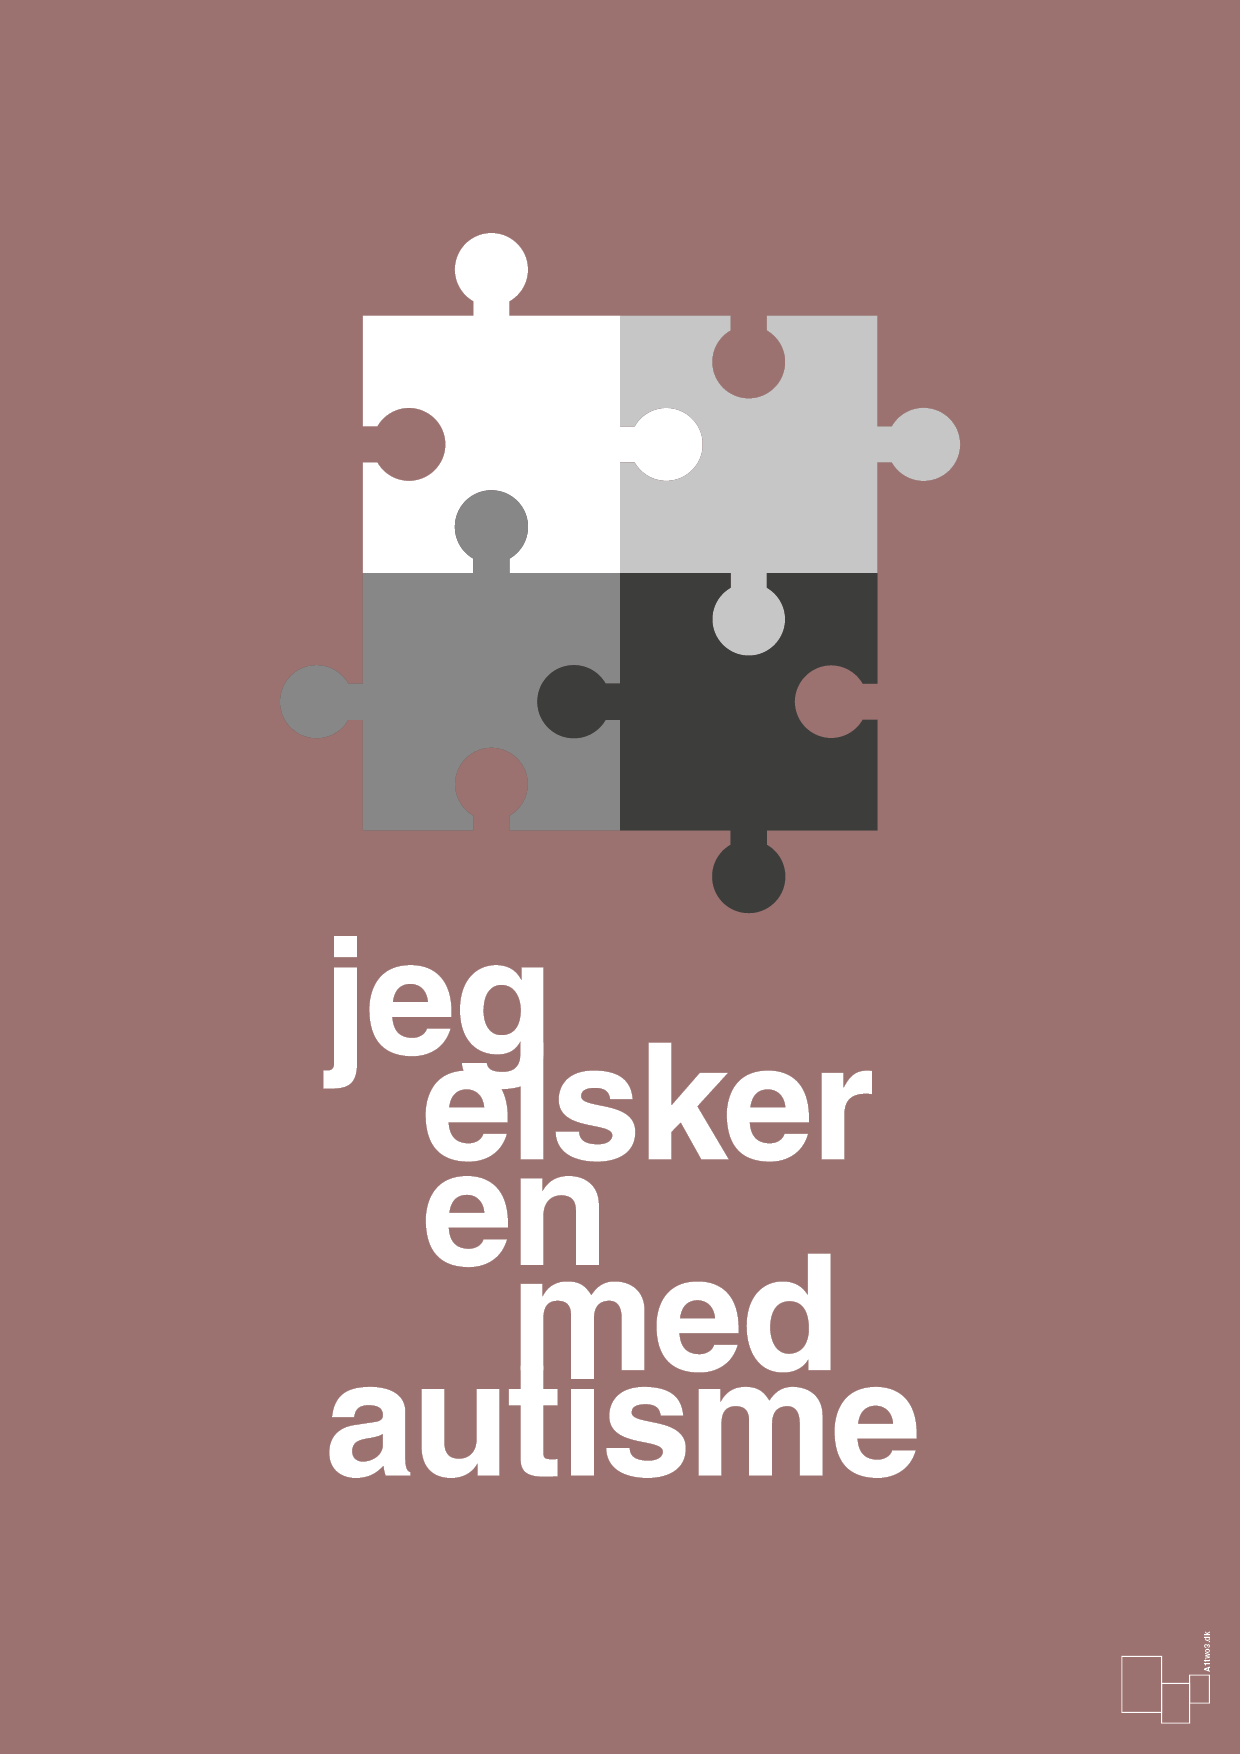 jeg elsker en med autisme - Plakat med Samfund i Plum